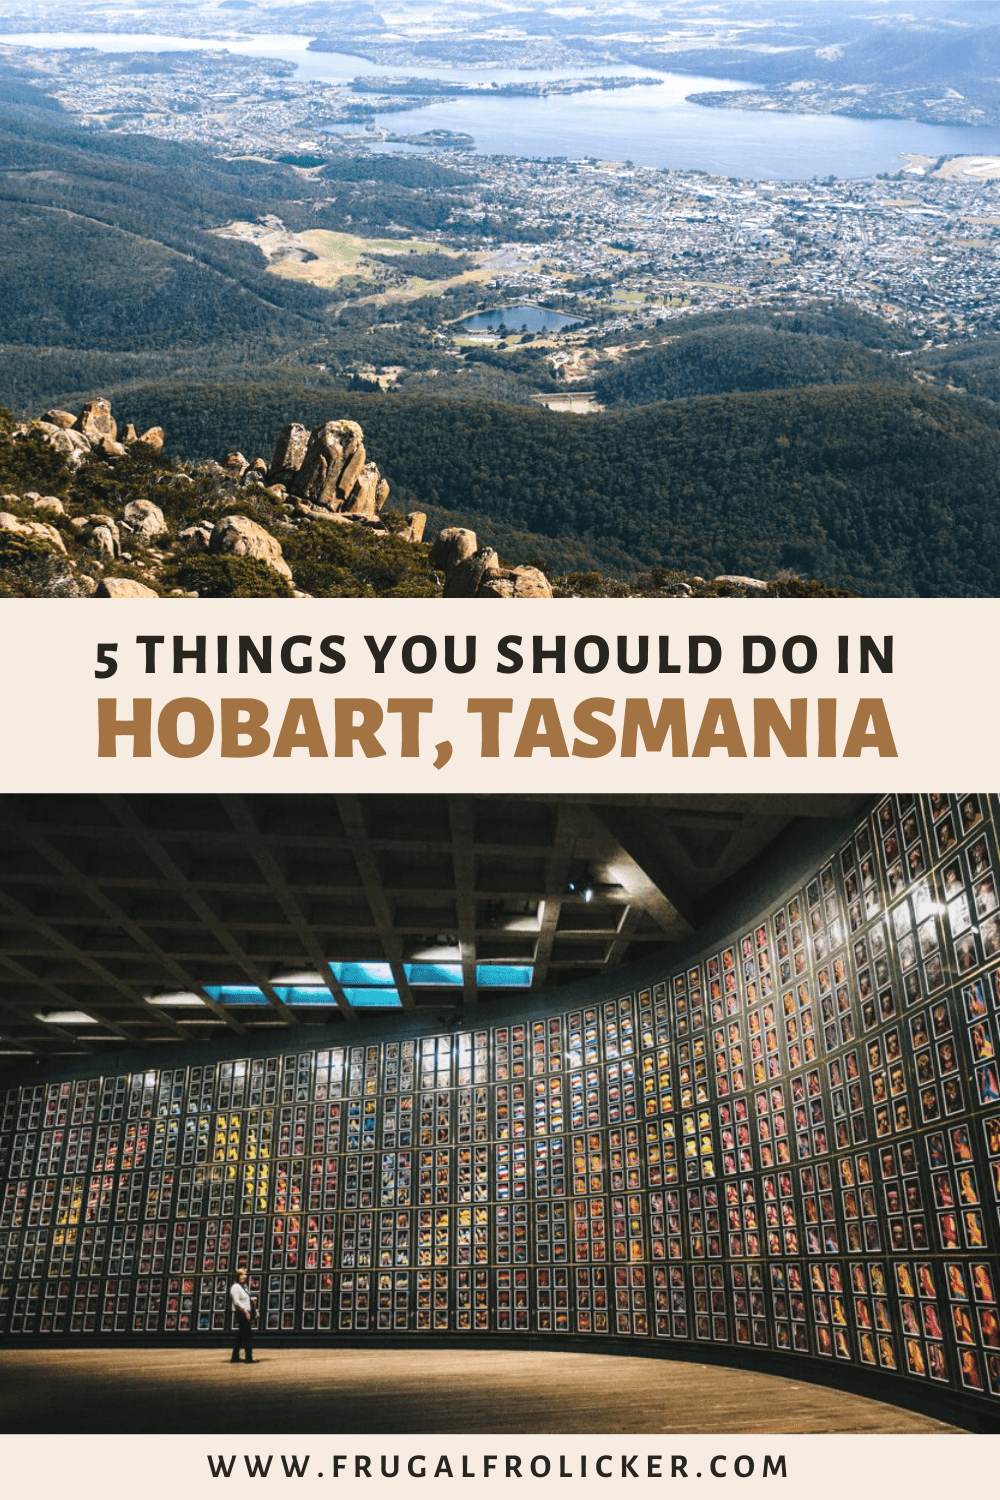 5 Things You Should Do In Hobart, Tasmania